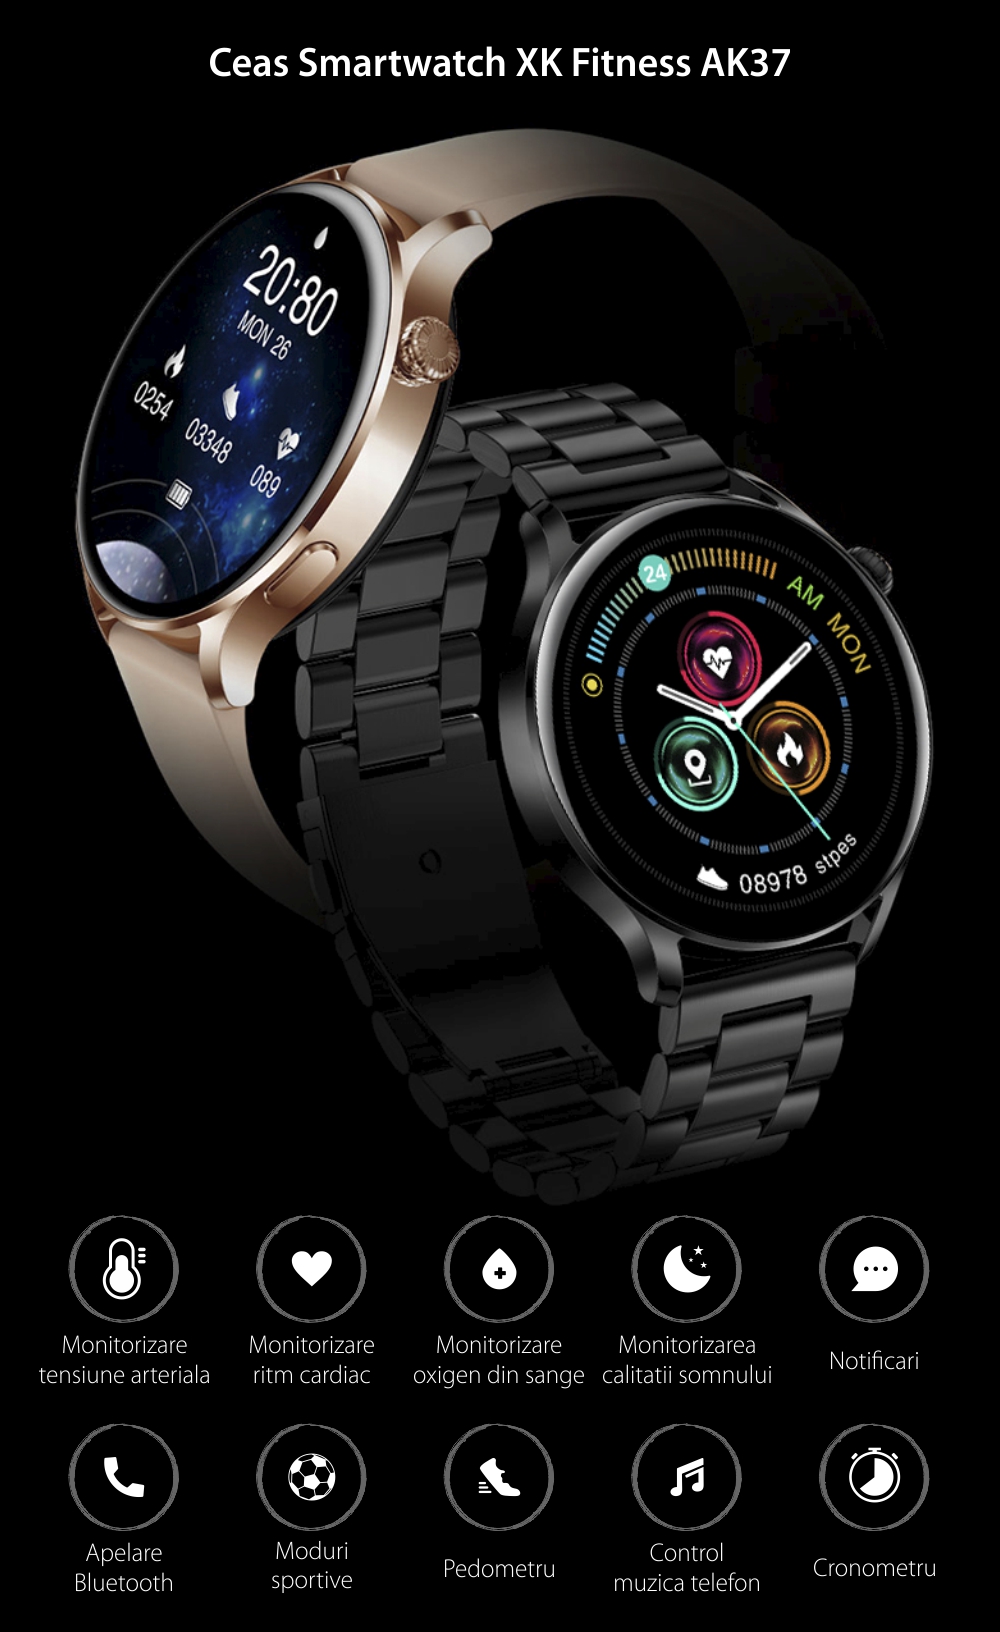 Ceas Smartwatch XK Fitness AK37 cu Functii monitorizare sanatate, Notificari, Bluetooth, Cronometru, Bratara metalica, Negru